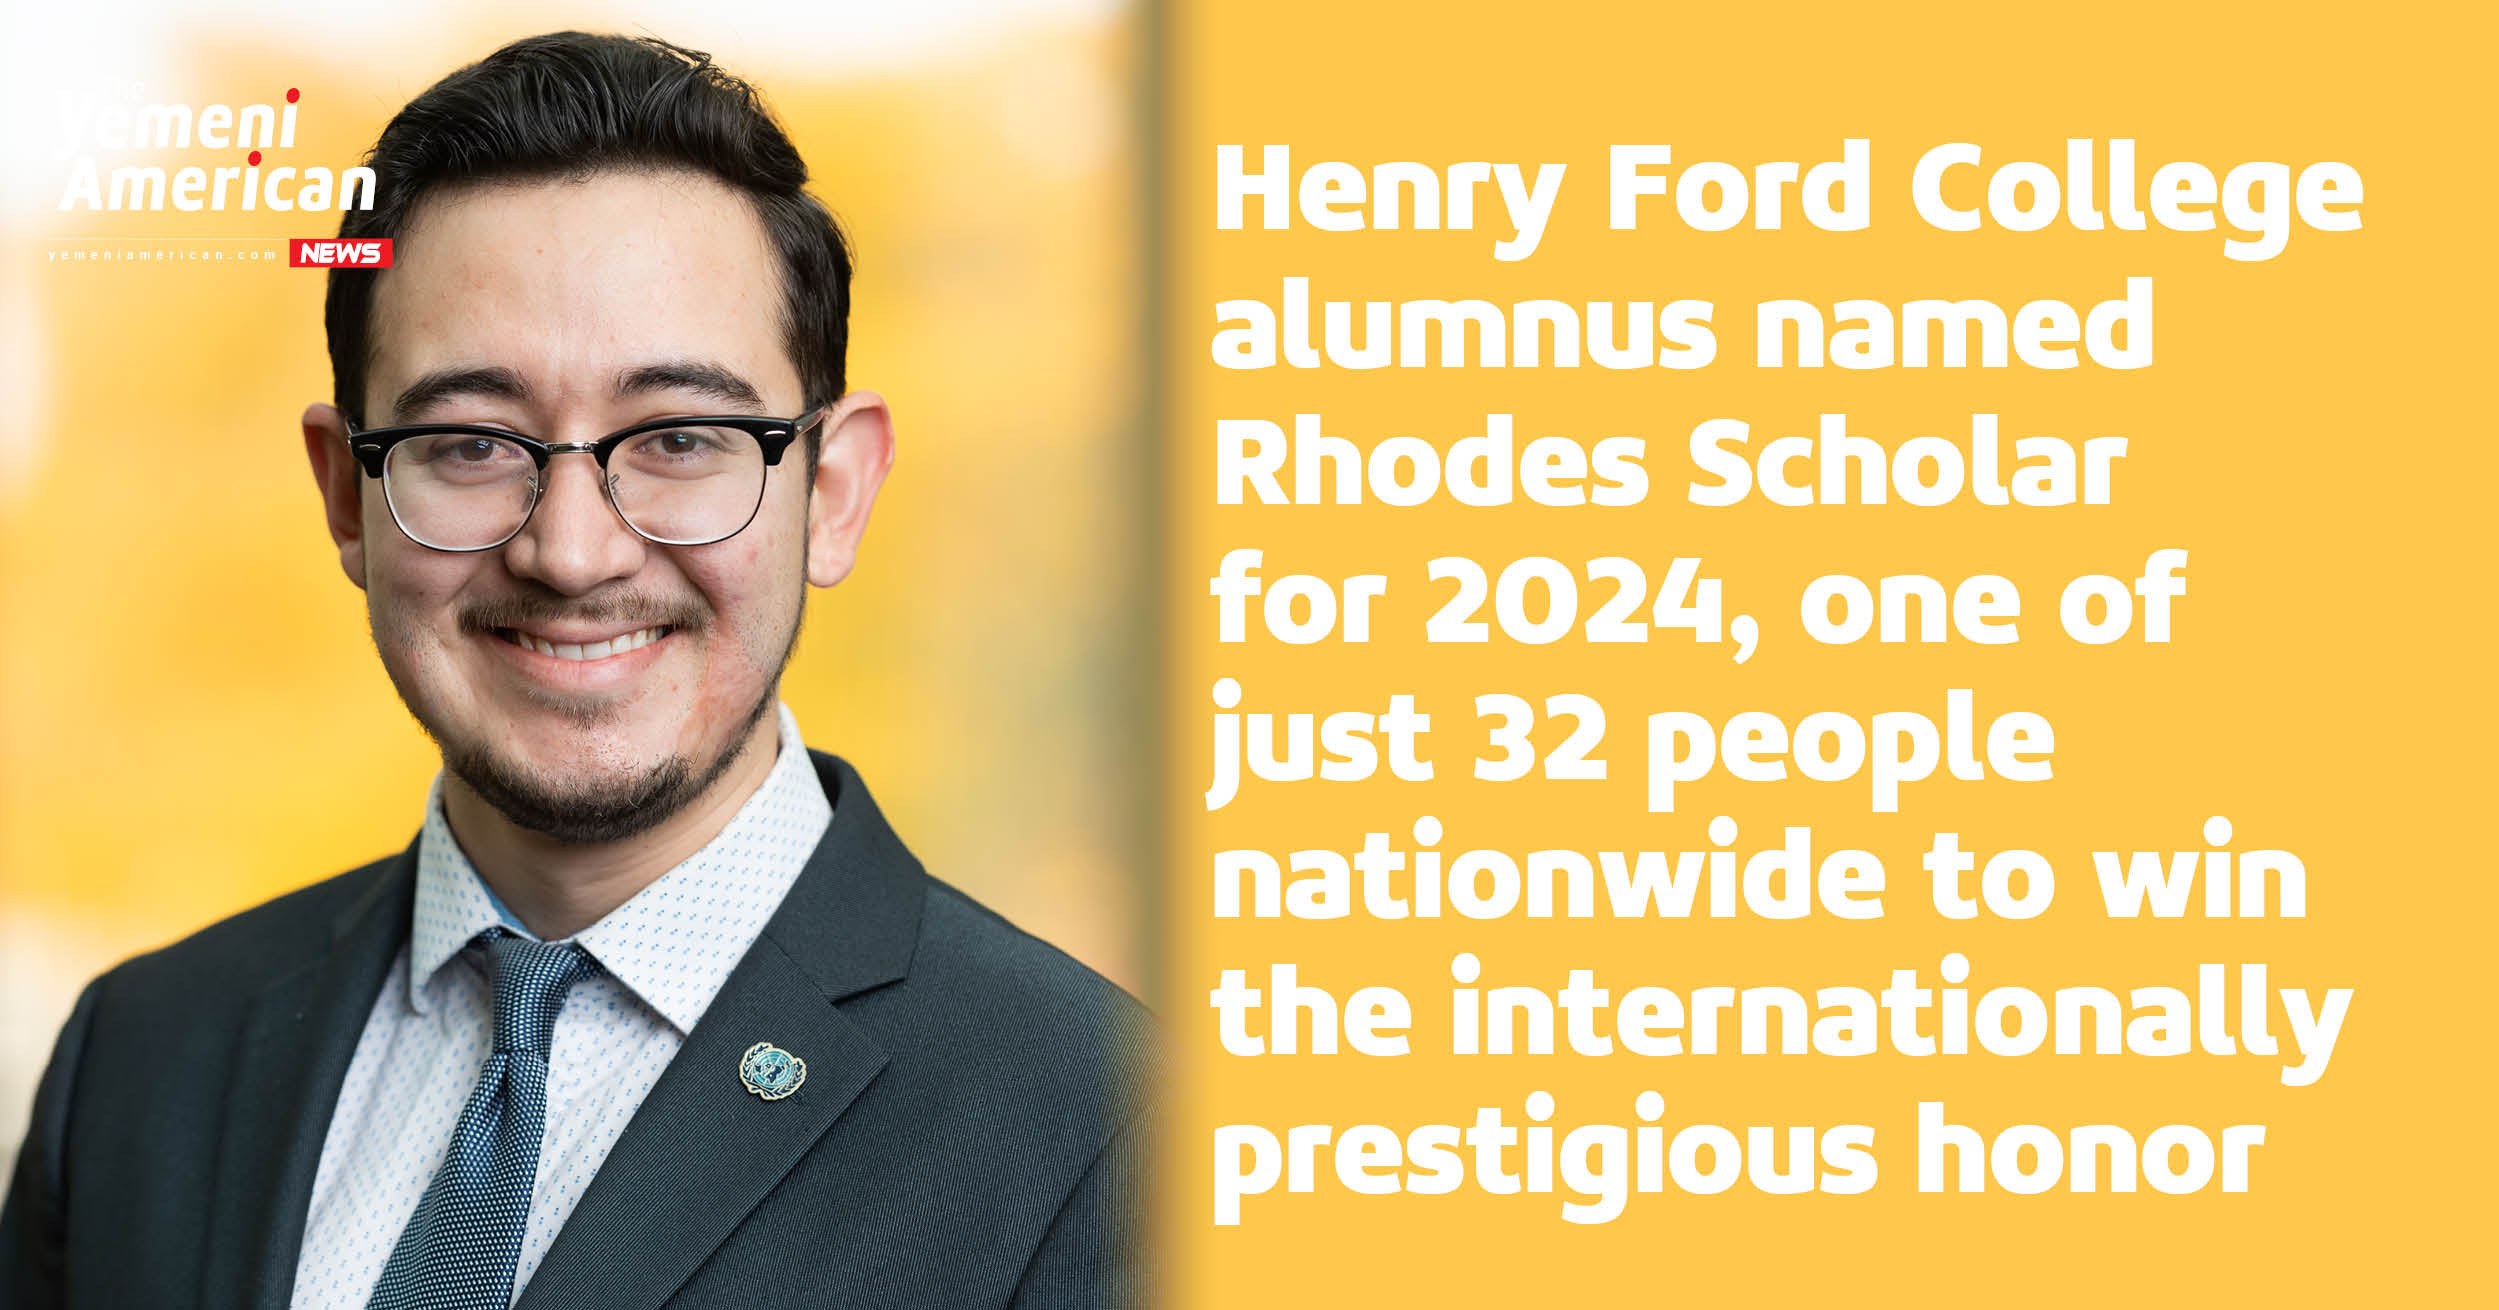 The Yemeni American » Henry Ford College alumnus named Rhodes Scholar